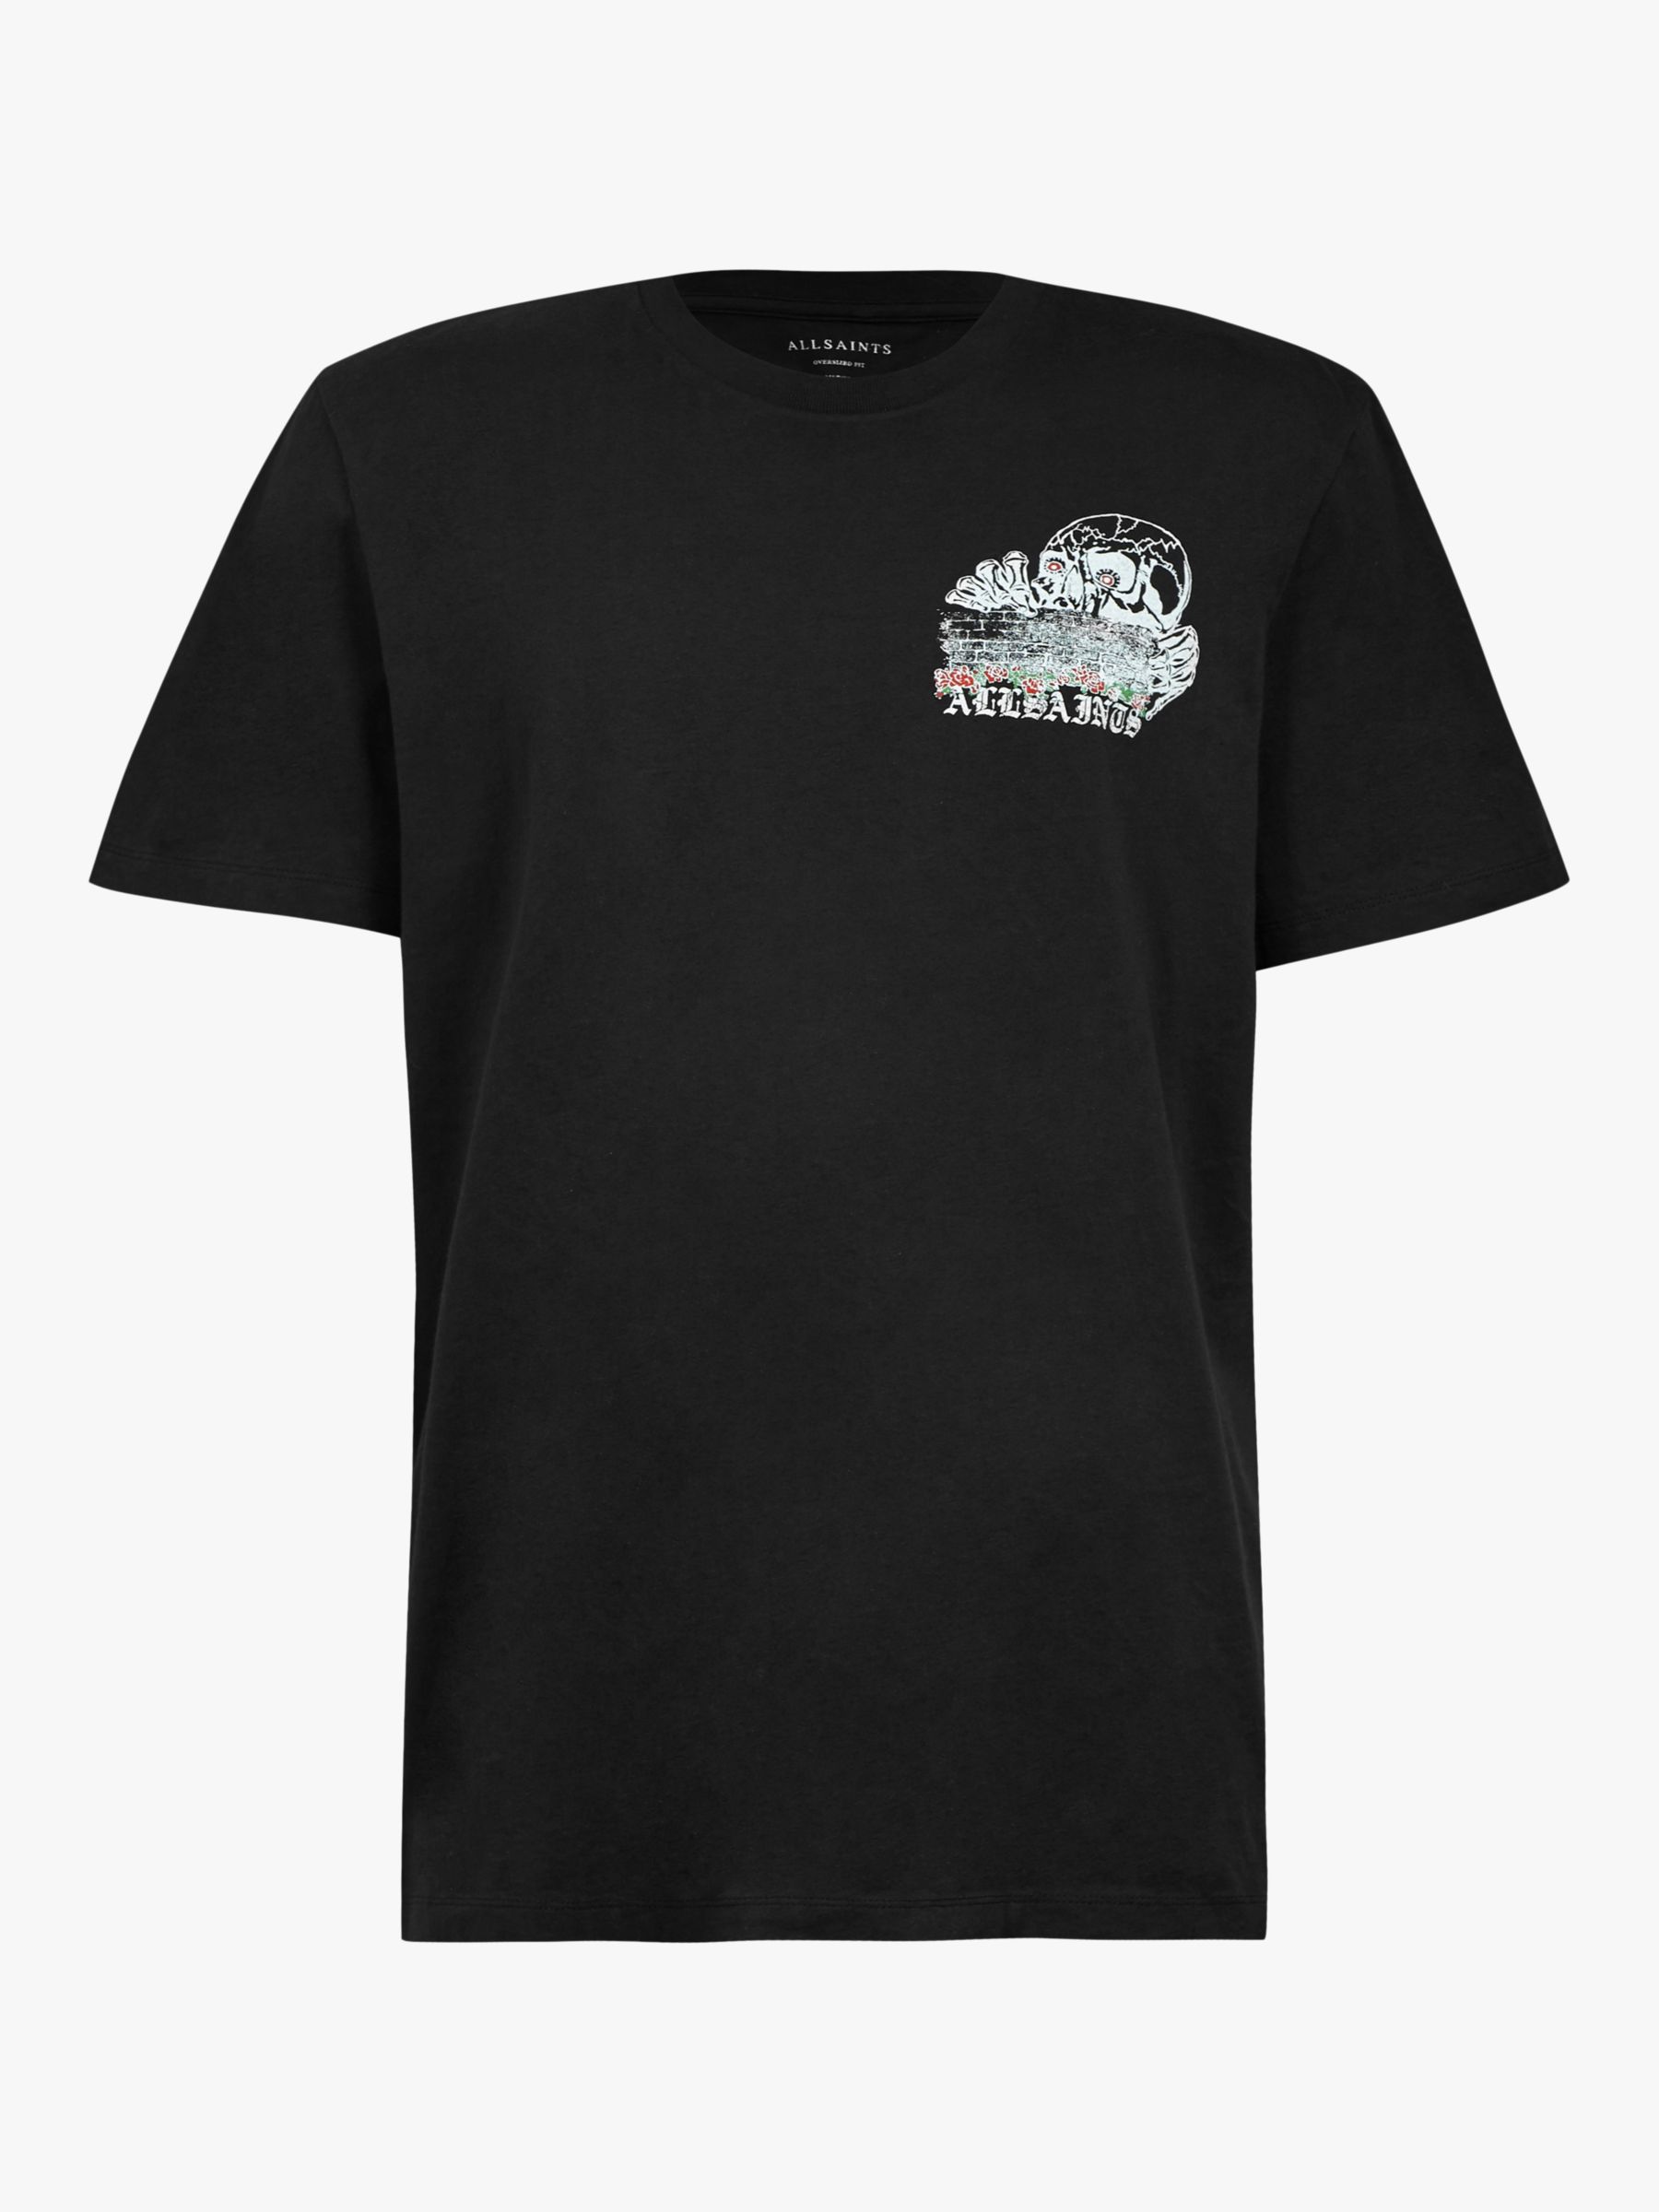 AllSaints Stopper Short Sleeve Graphic T-Shirt, Jet Black